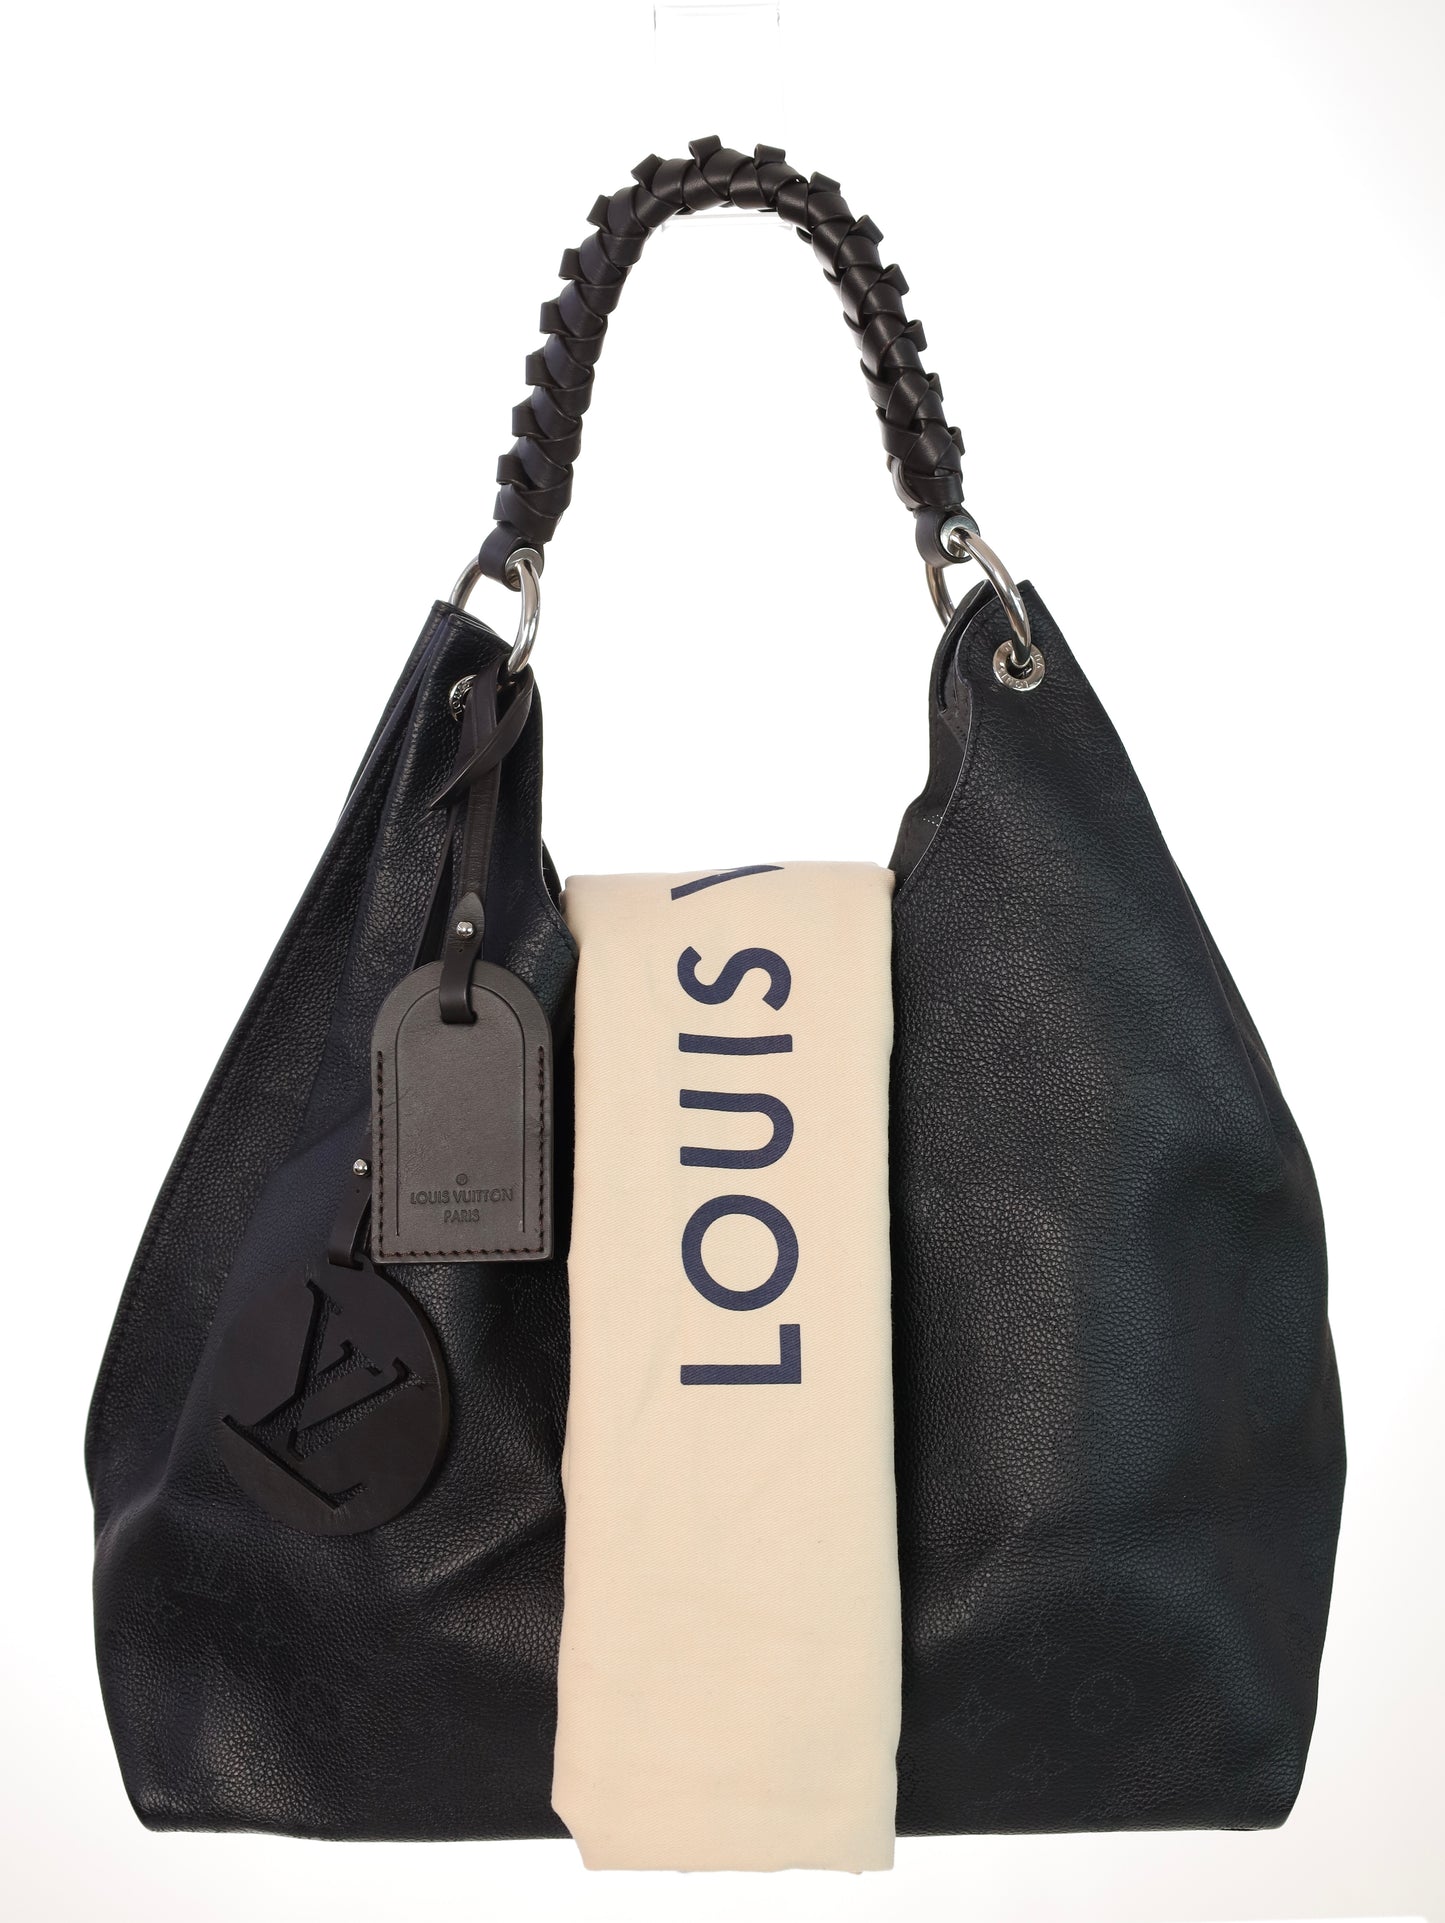 LOUIS VUITTON Carmel M53188 Mahina Shopper Monogram Hobo Bag